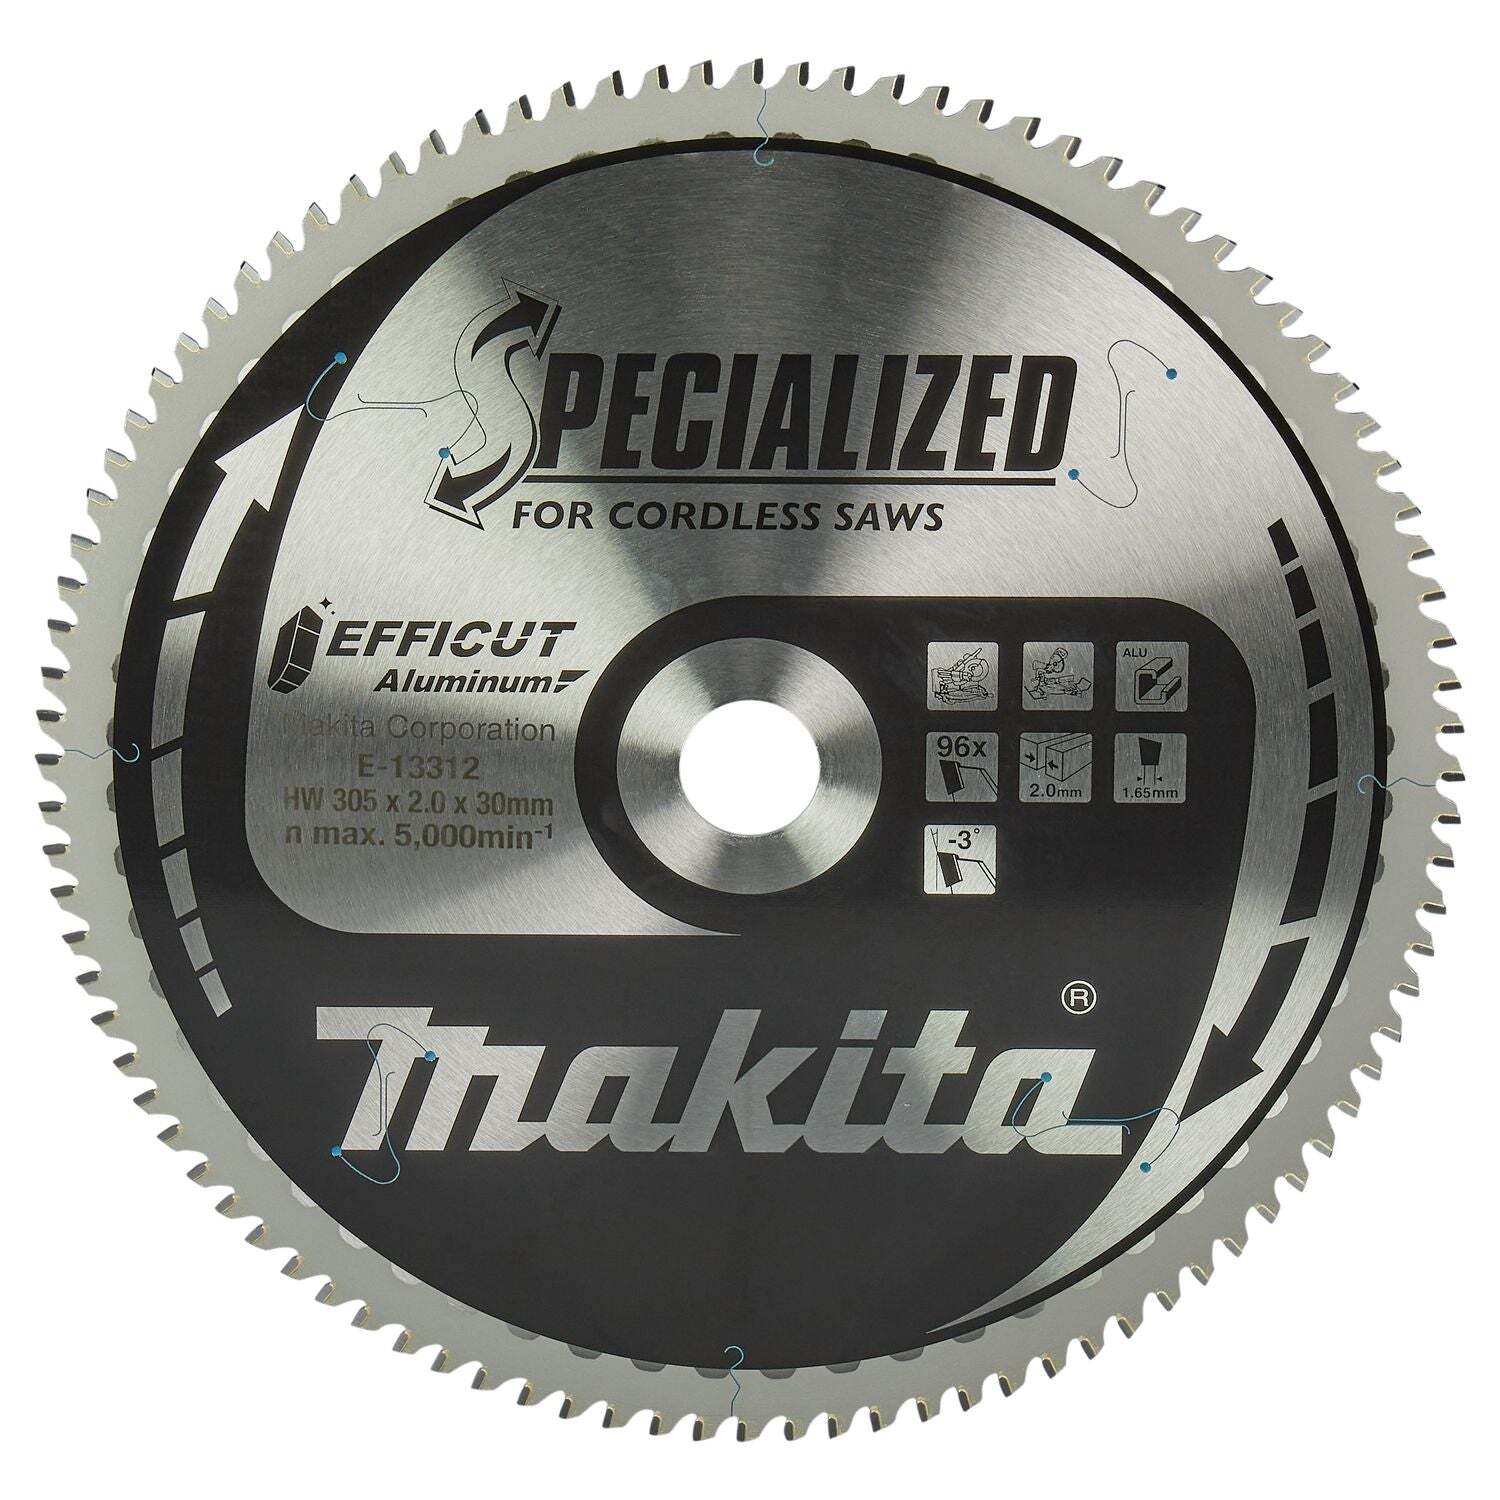 Makita E-13312 Afkortzaagblad voor Aluminium | Efficut | Ø 305mm Asgat 30mm 96T